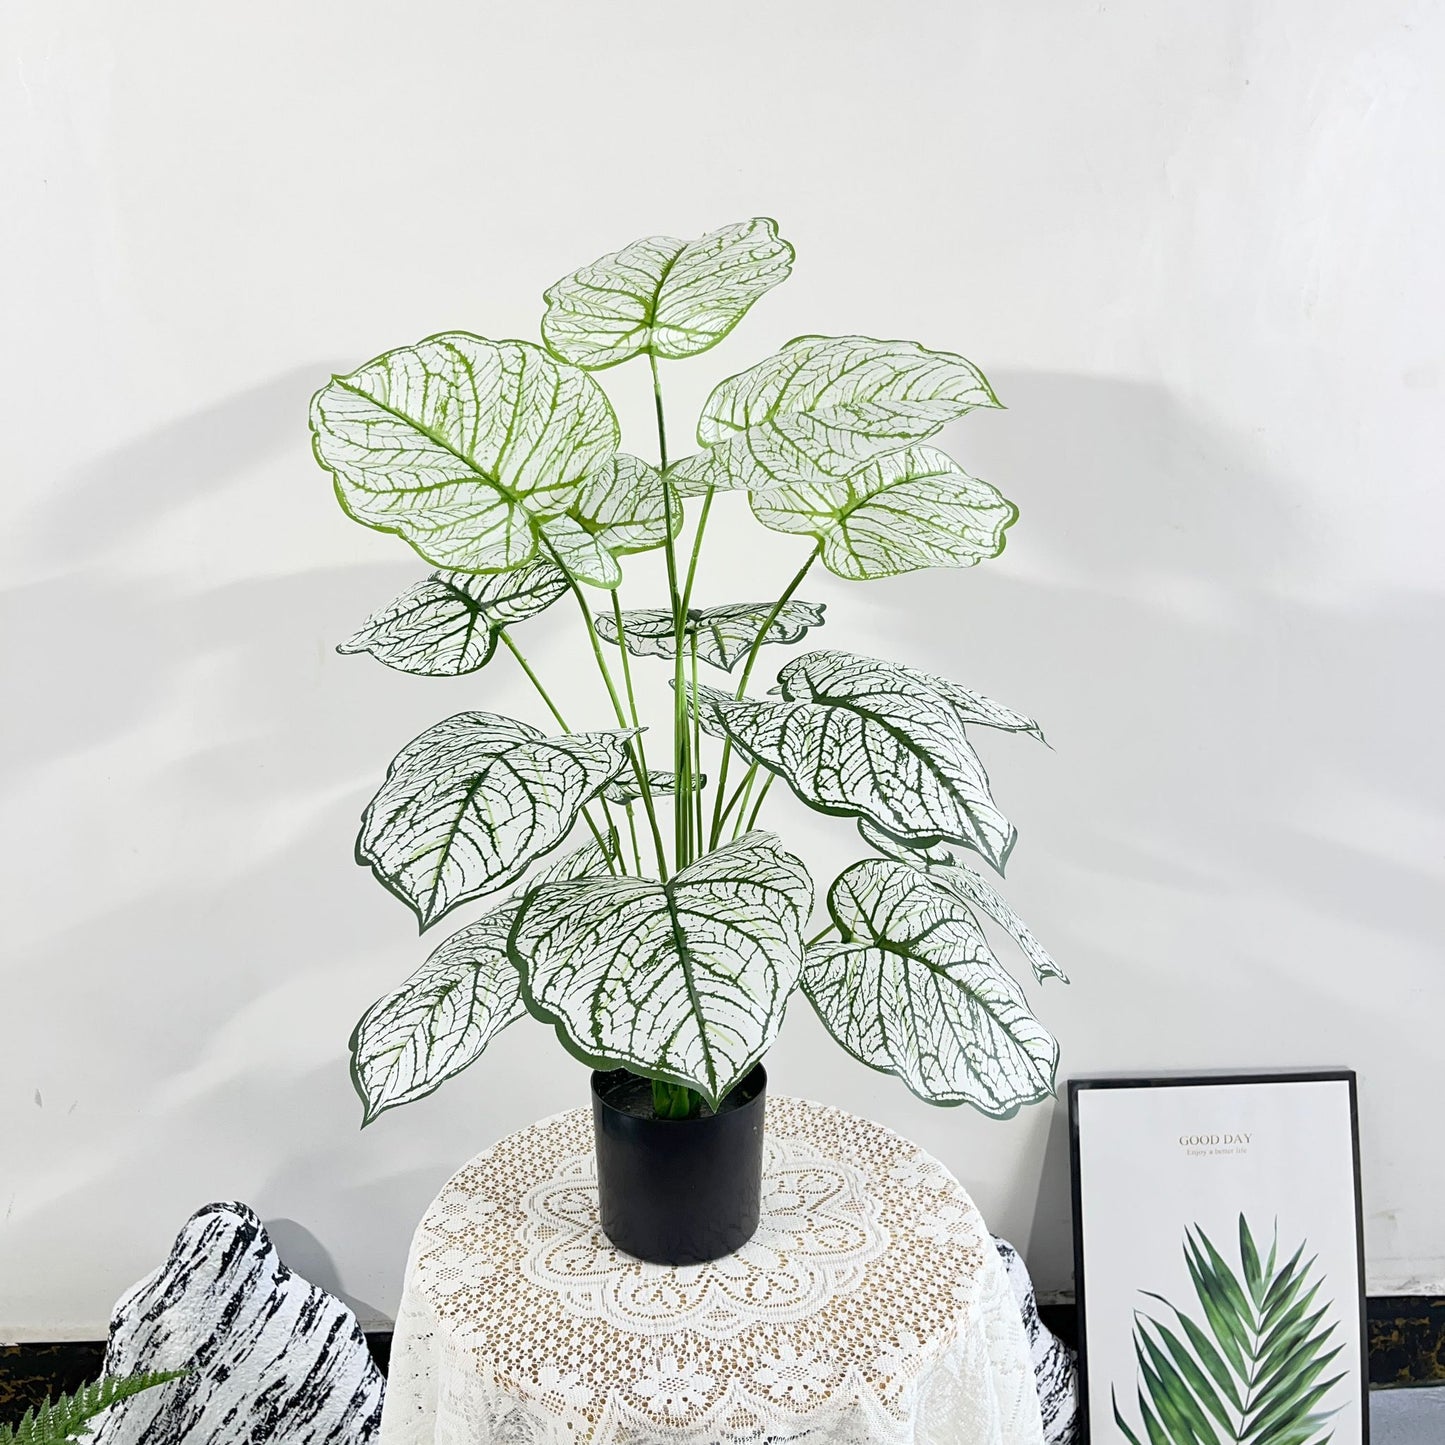 Artificial Pothos White Plant 75cm Tall